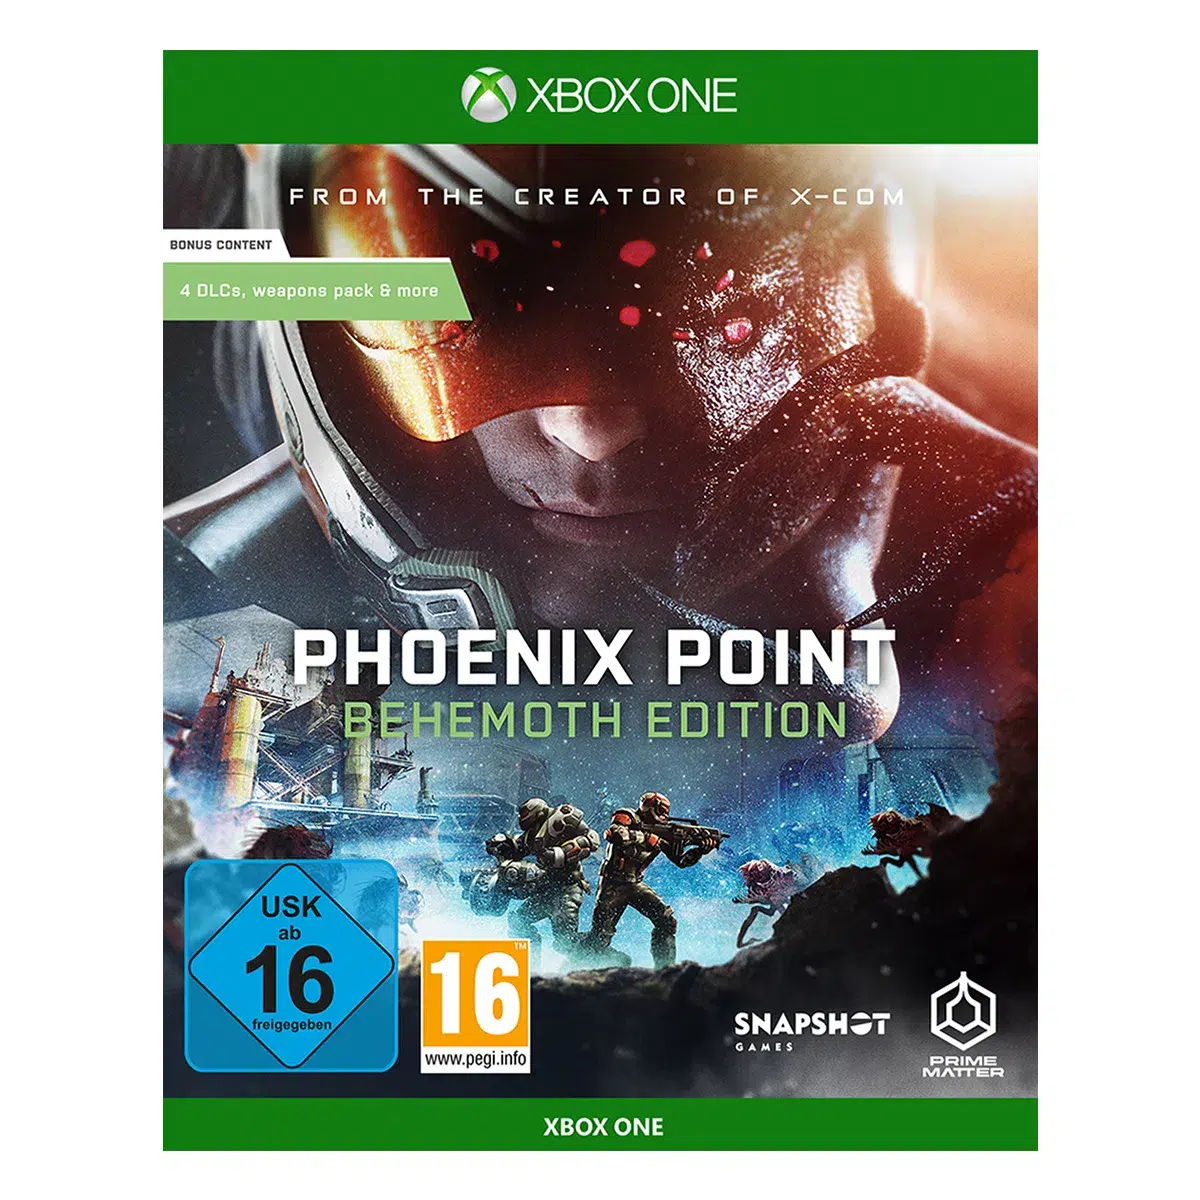 Phoenix Point: Behemoth Edition - XONE